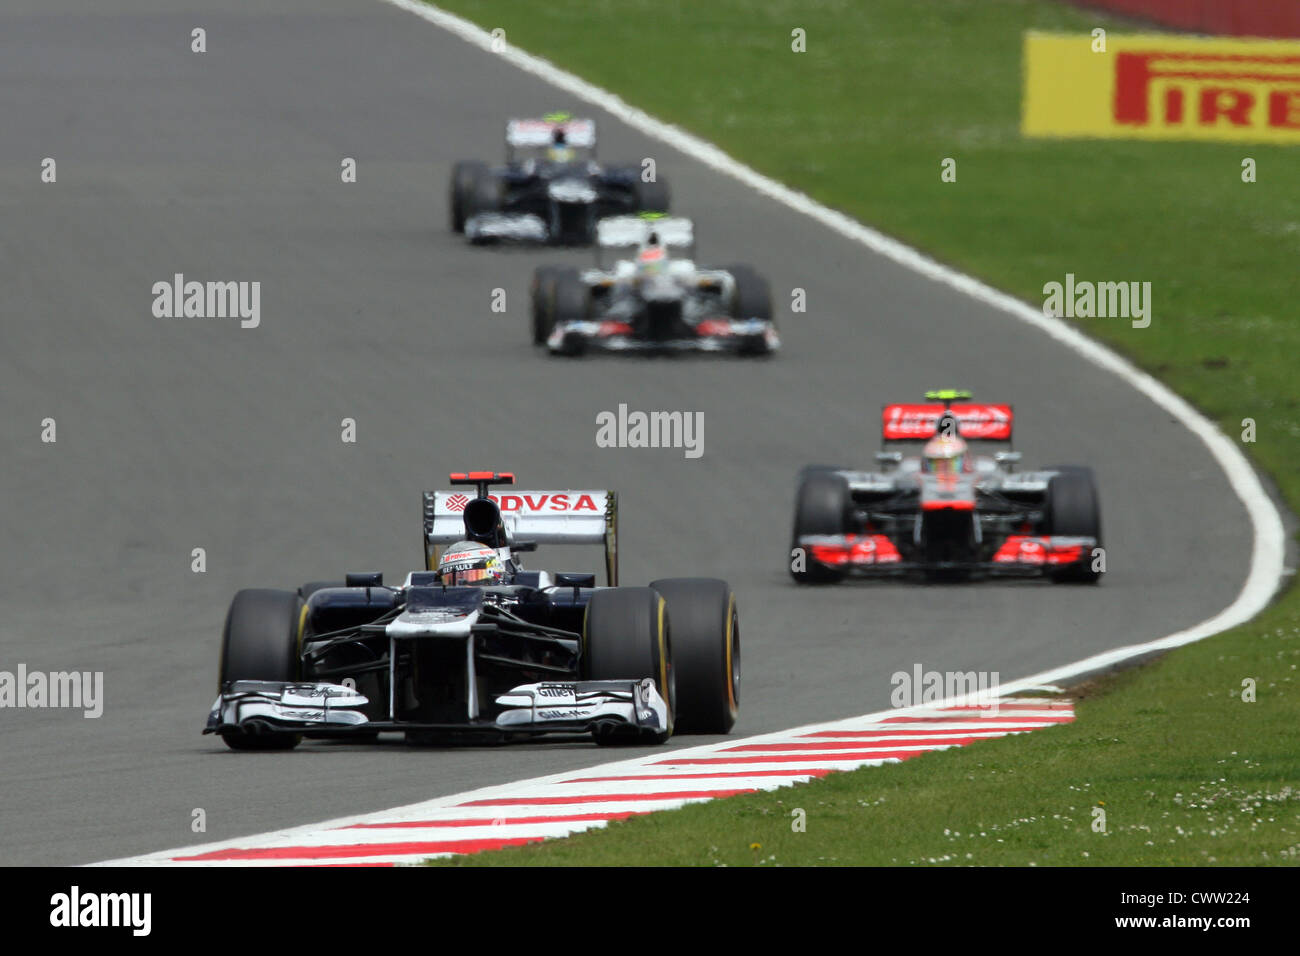 Pastor Maldonado (WilliamsF1) Grand Prix de Grande-Bretagne, Silverstone UK. La formule 1, F1 Banque D'Images